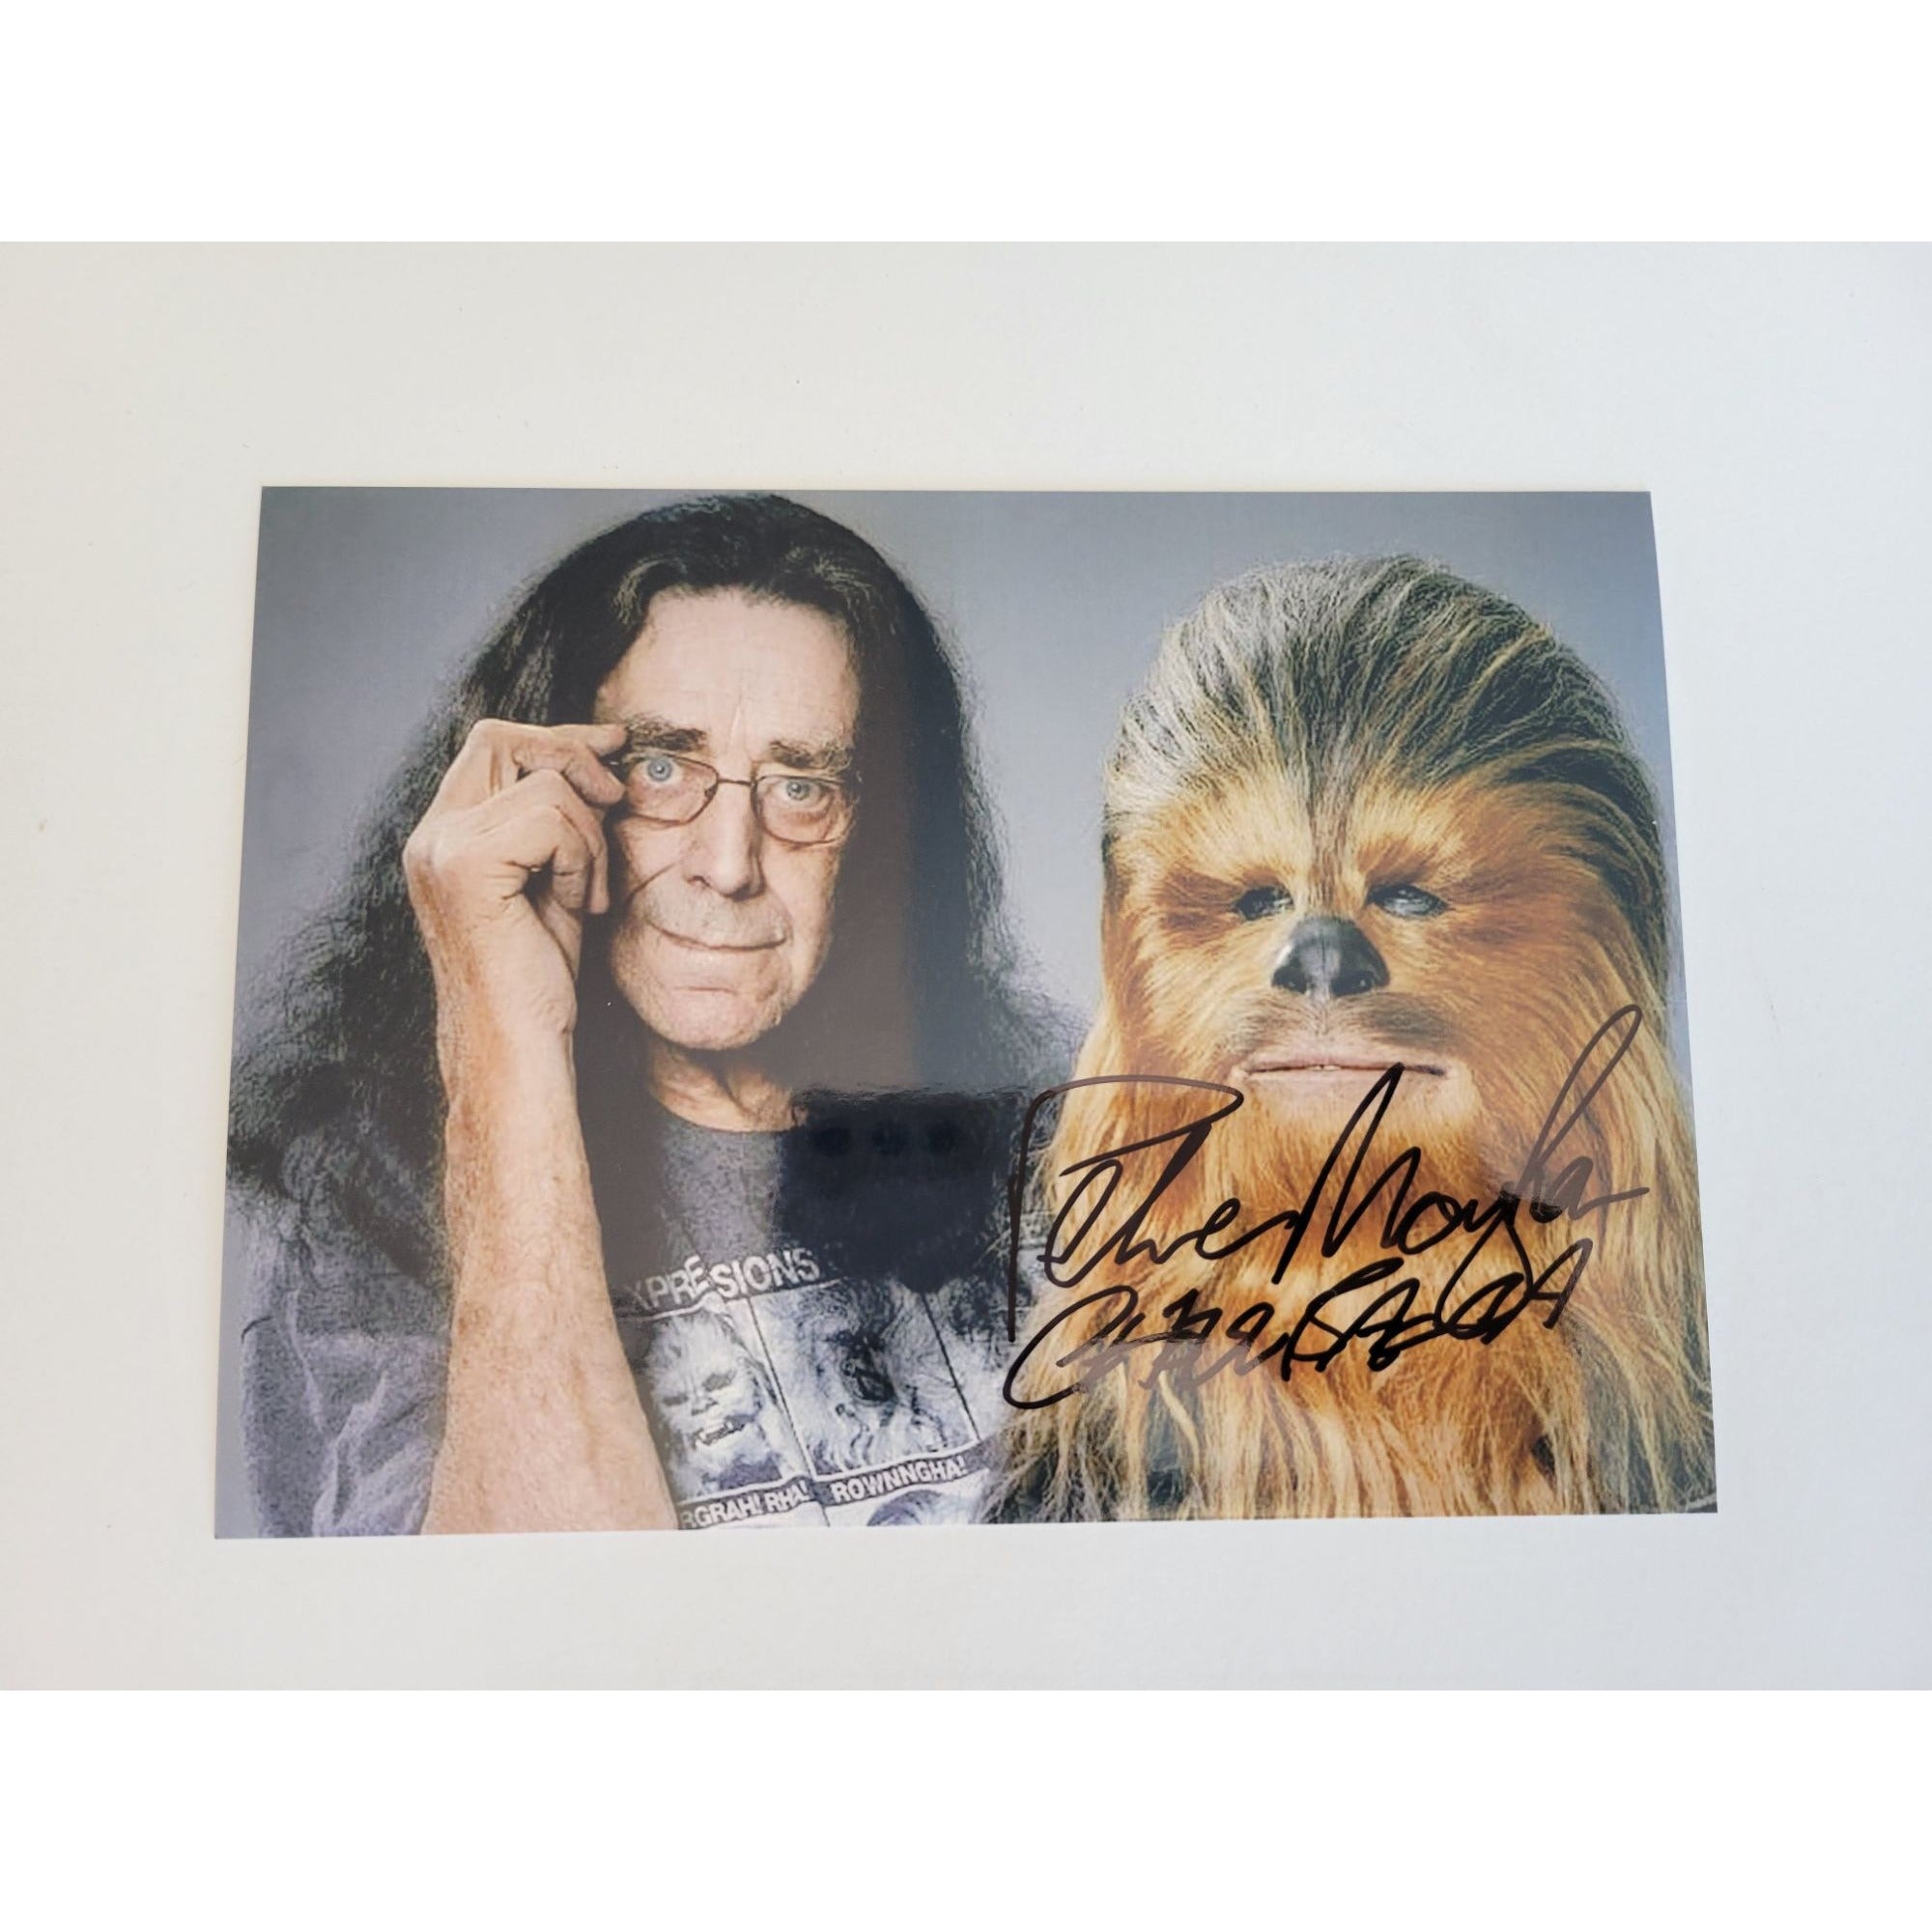 Peter Mayhew Chewbacca Star Wars 5x7 photo signed